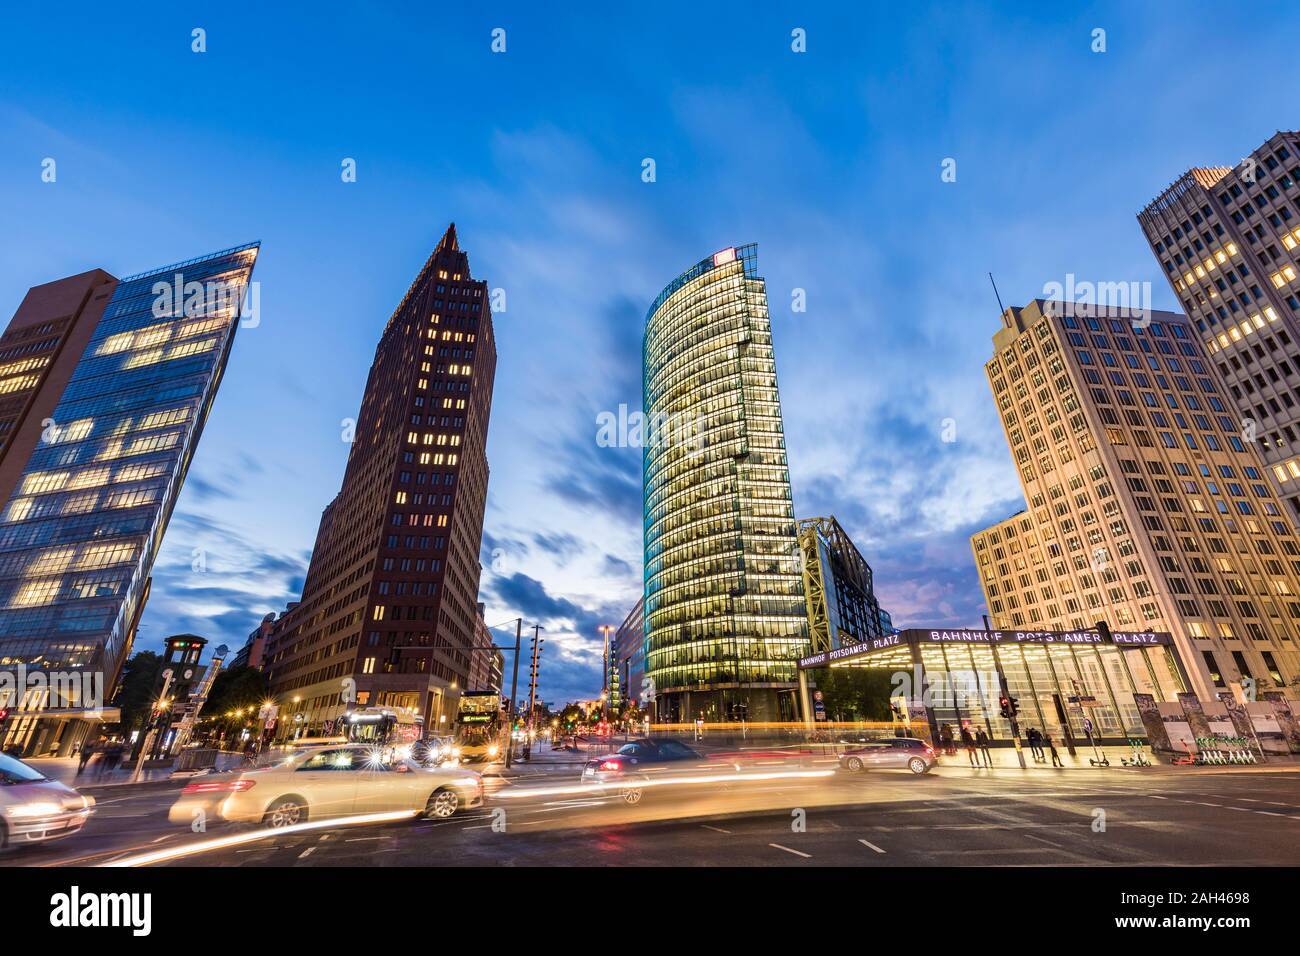 Alemania, Berlín Mitte, Potsdamer Platz, el Kollhoff-Tower, Bahntower, Beisheim-Center, el tráfico en la calle Foto de stock